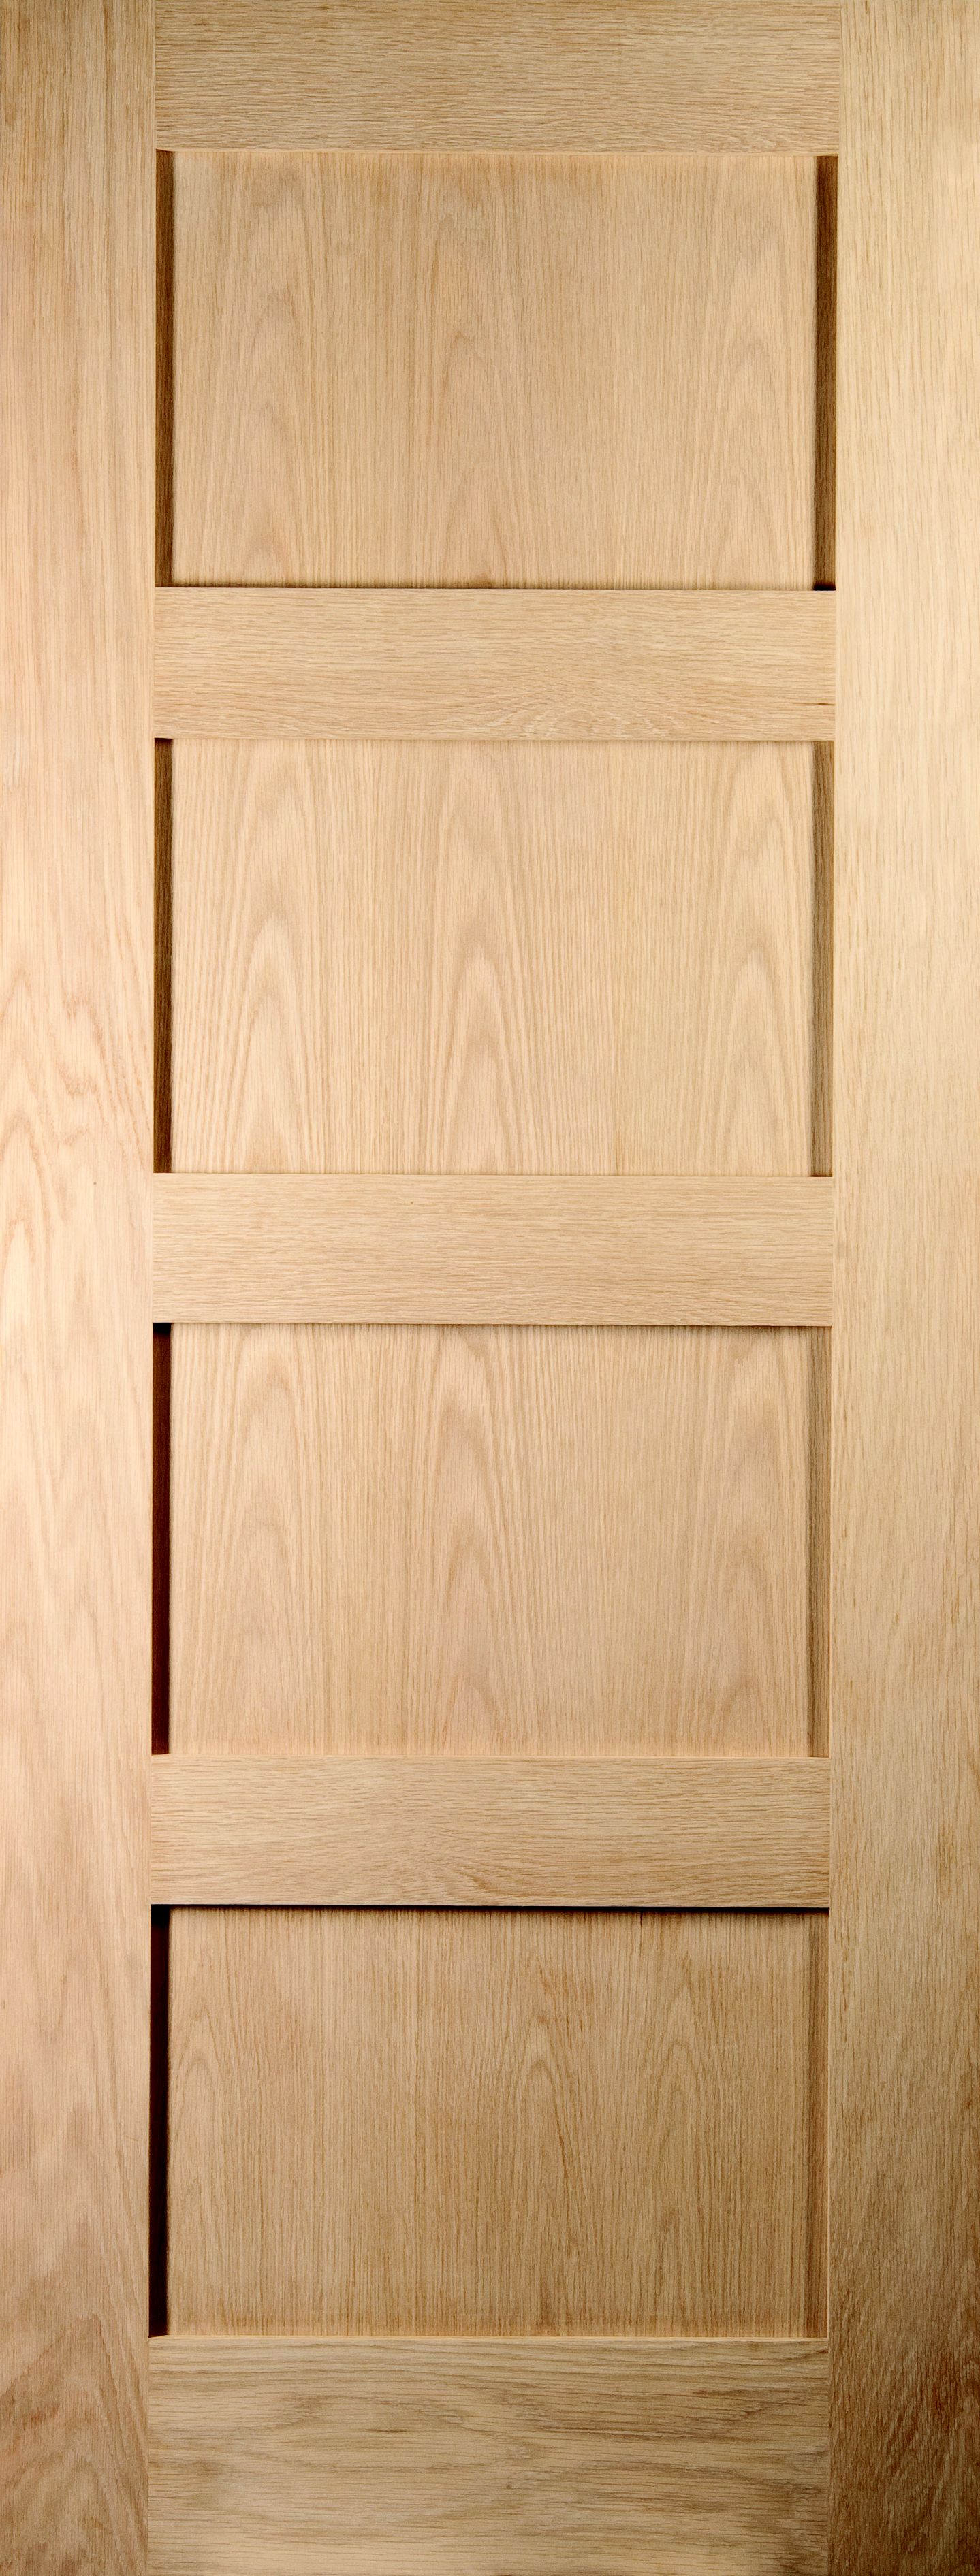 4 panel Unglazed Shaker White oak veneer Internal Door, (H)1981mm (W)838mm (T)35mm